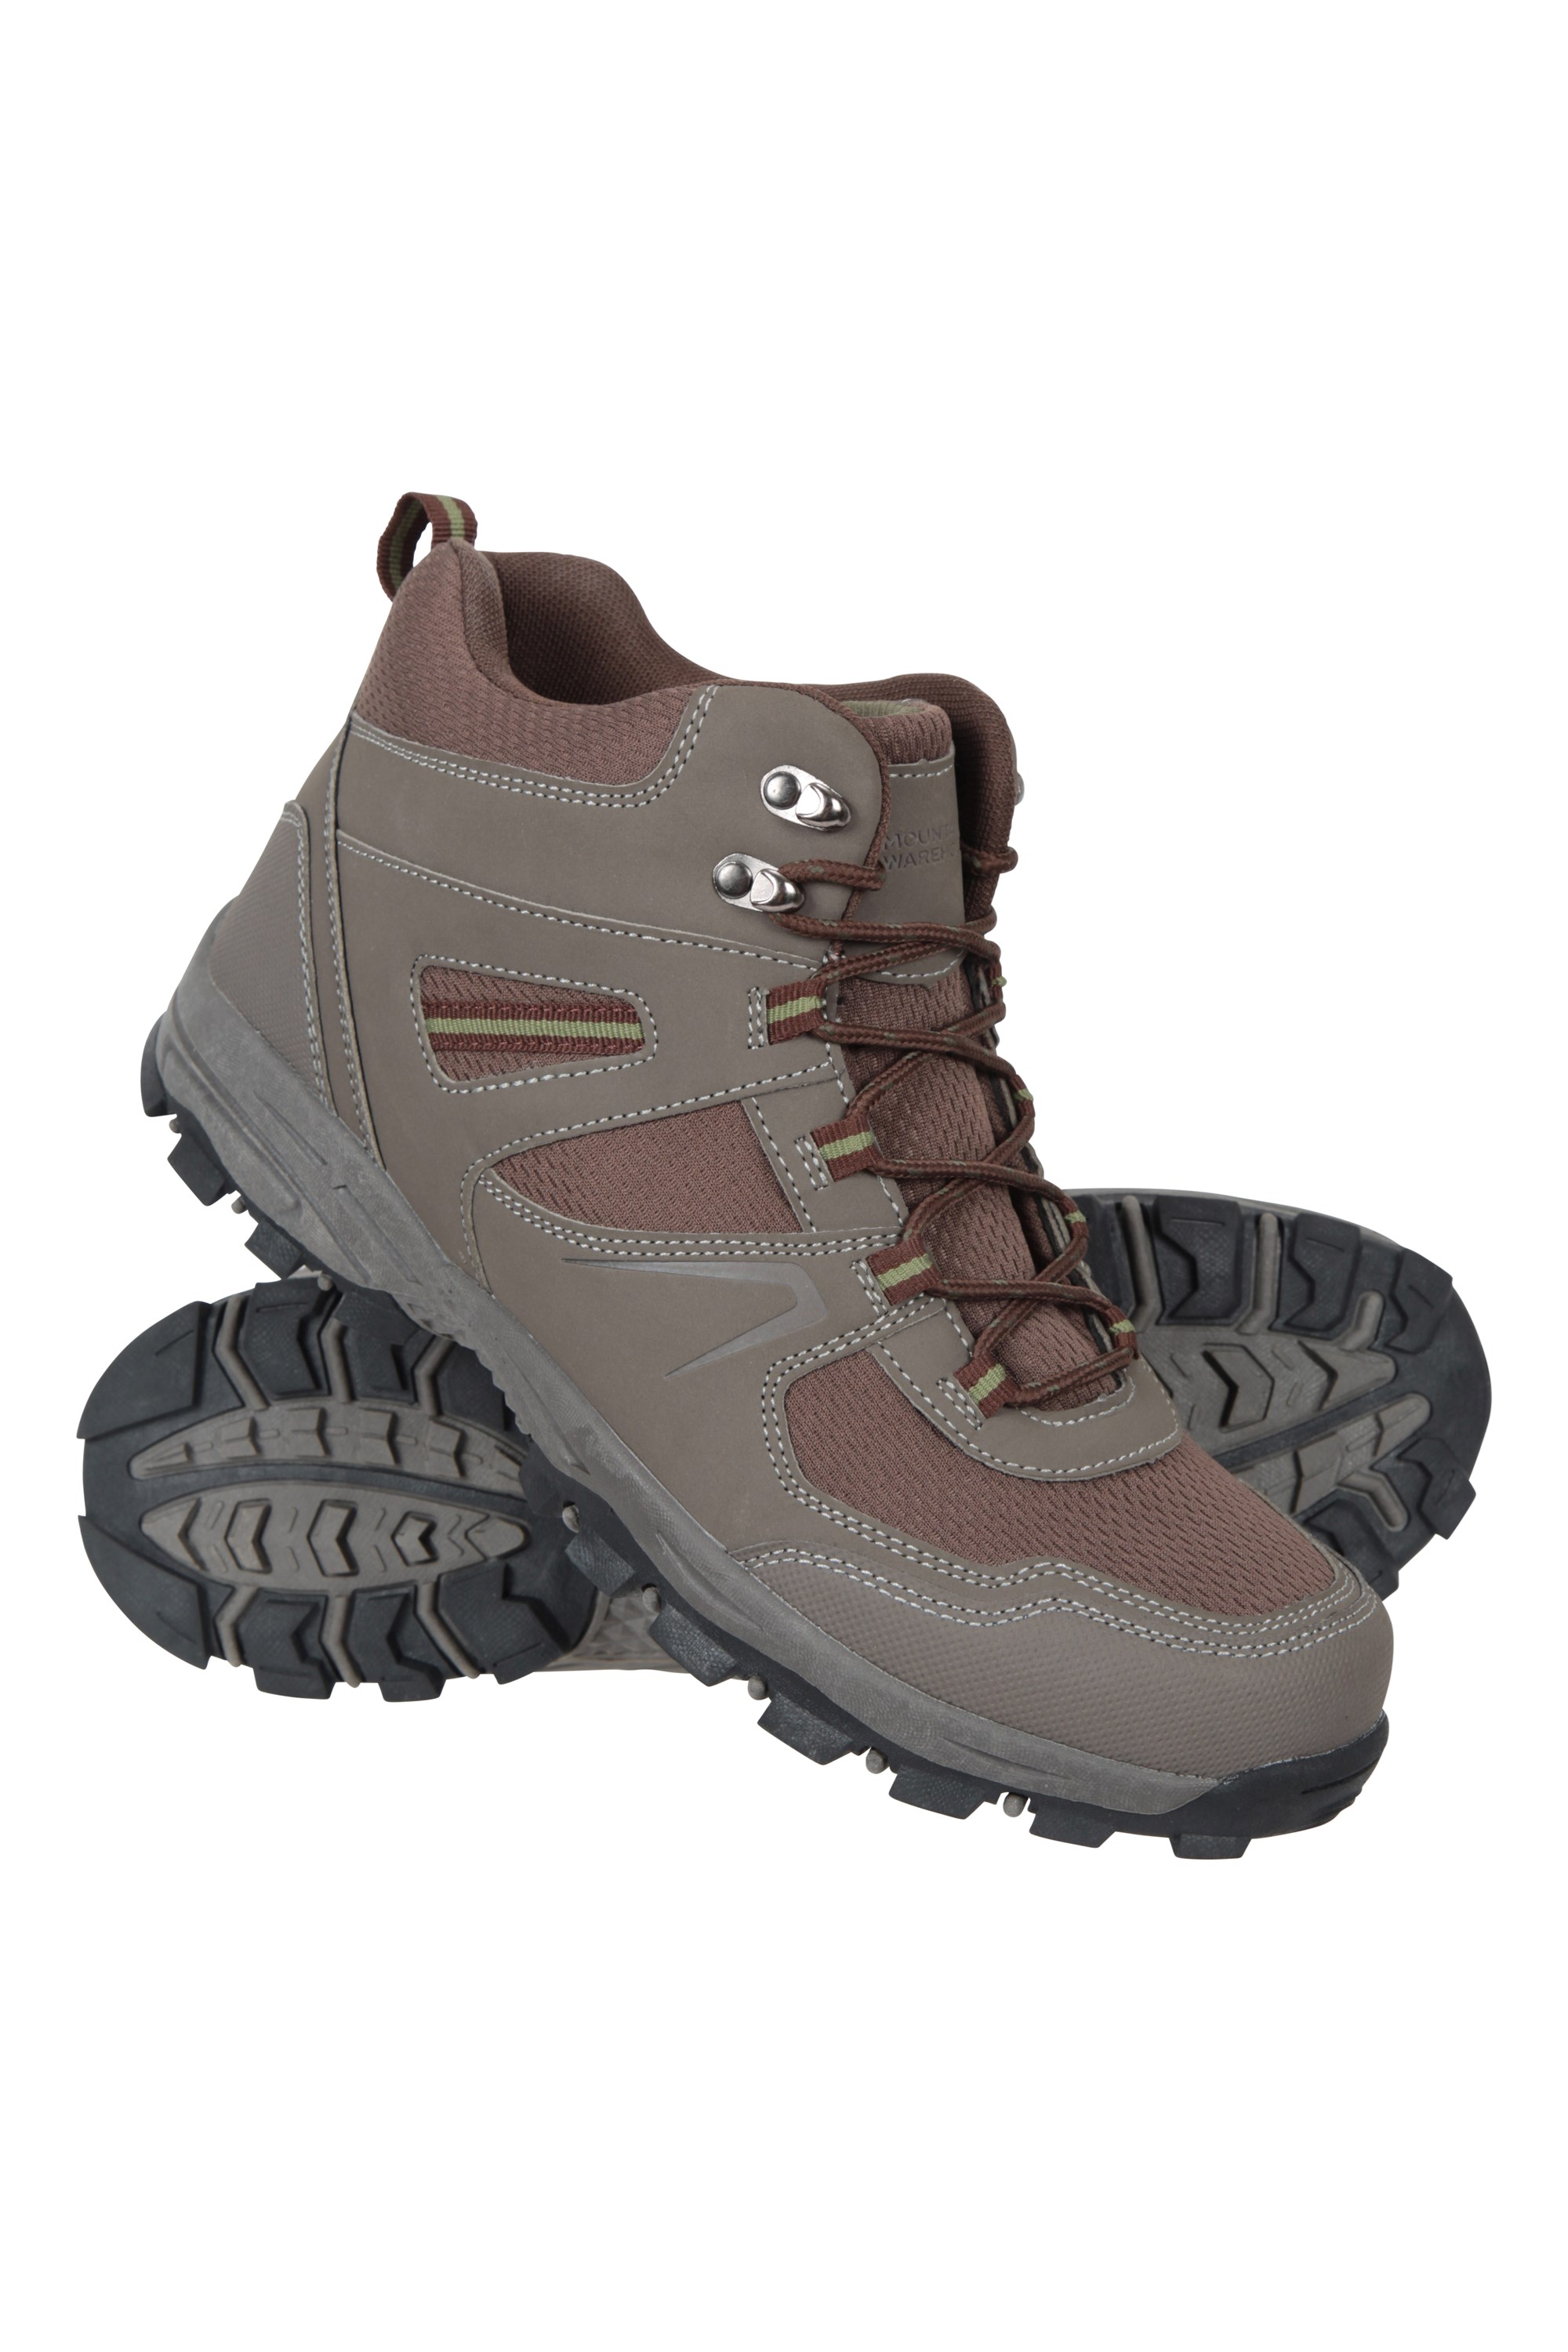 Mountain Warehouse Mountain Warehouse  Zoom Womens Active Shoe In Grey 8 UK 